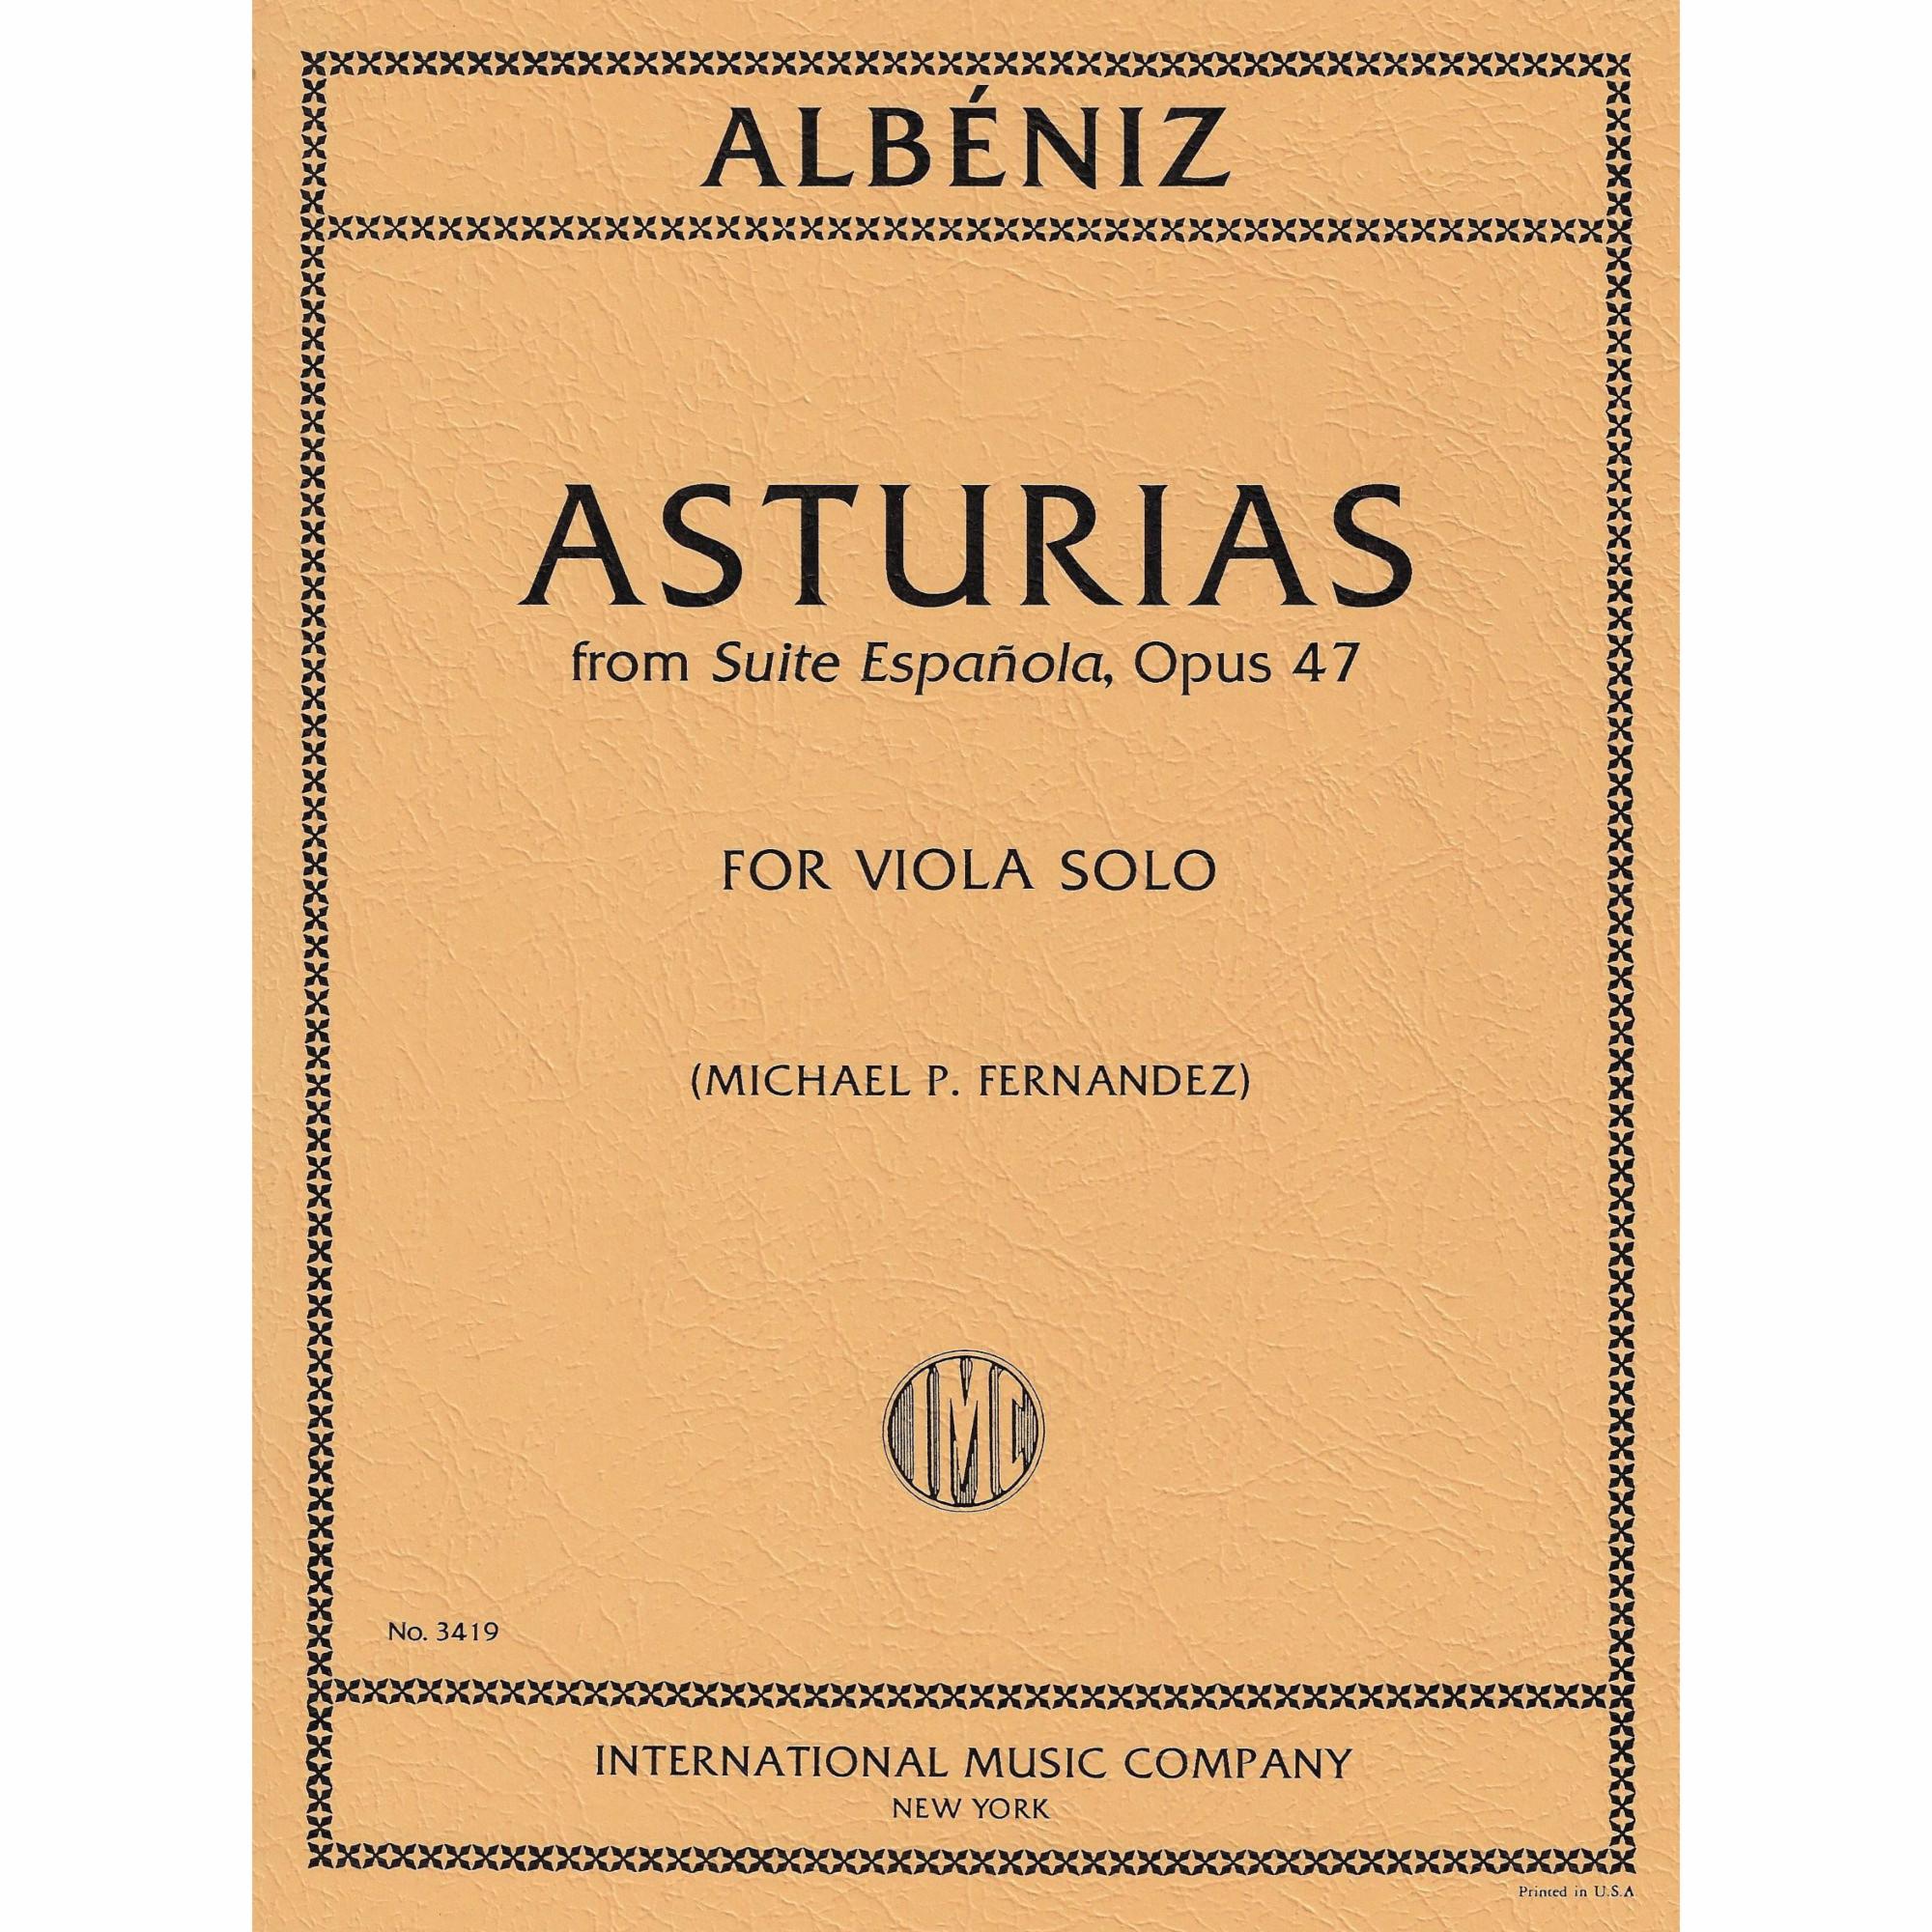 Albeniz -- Asturias, from Suite Espanola, Op. 47 for Solo Viola